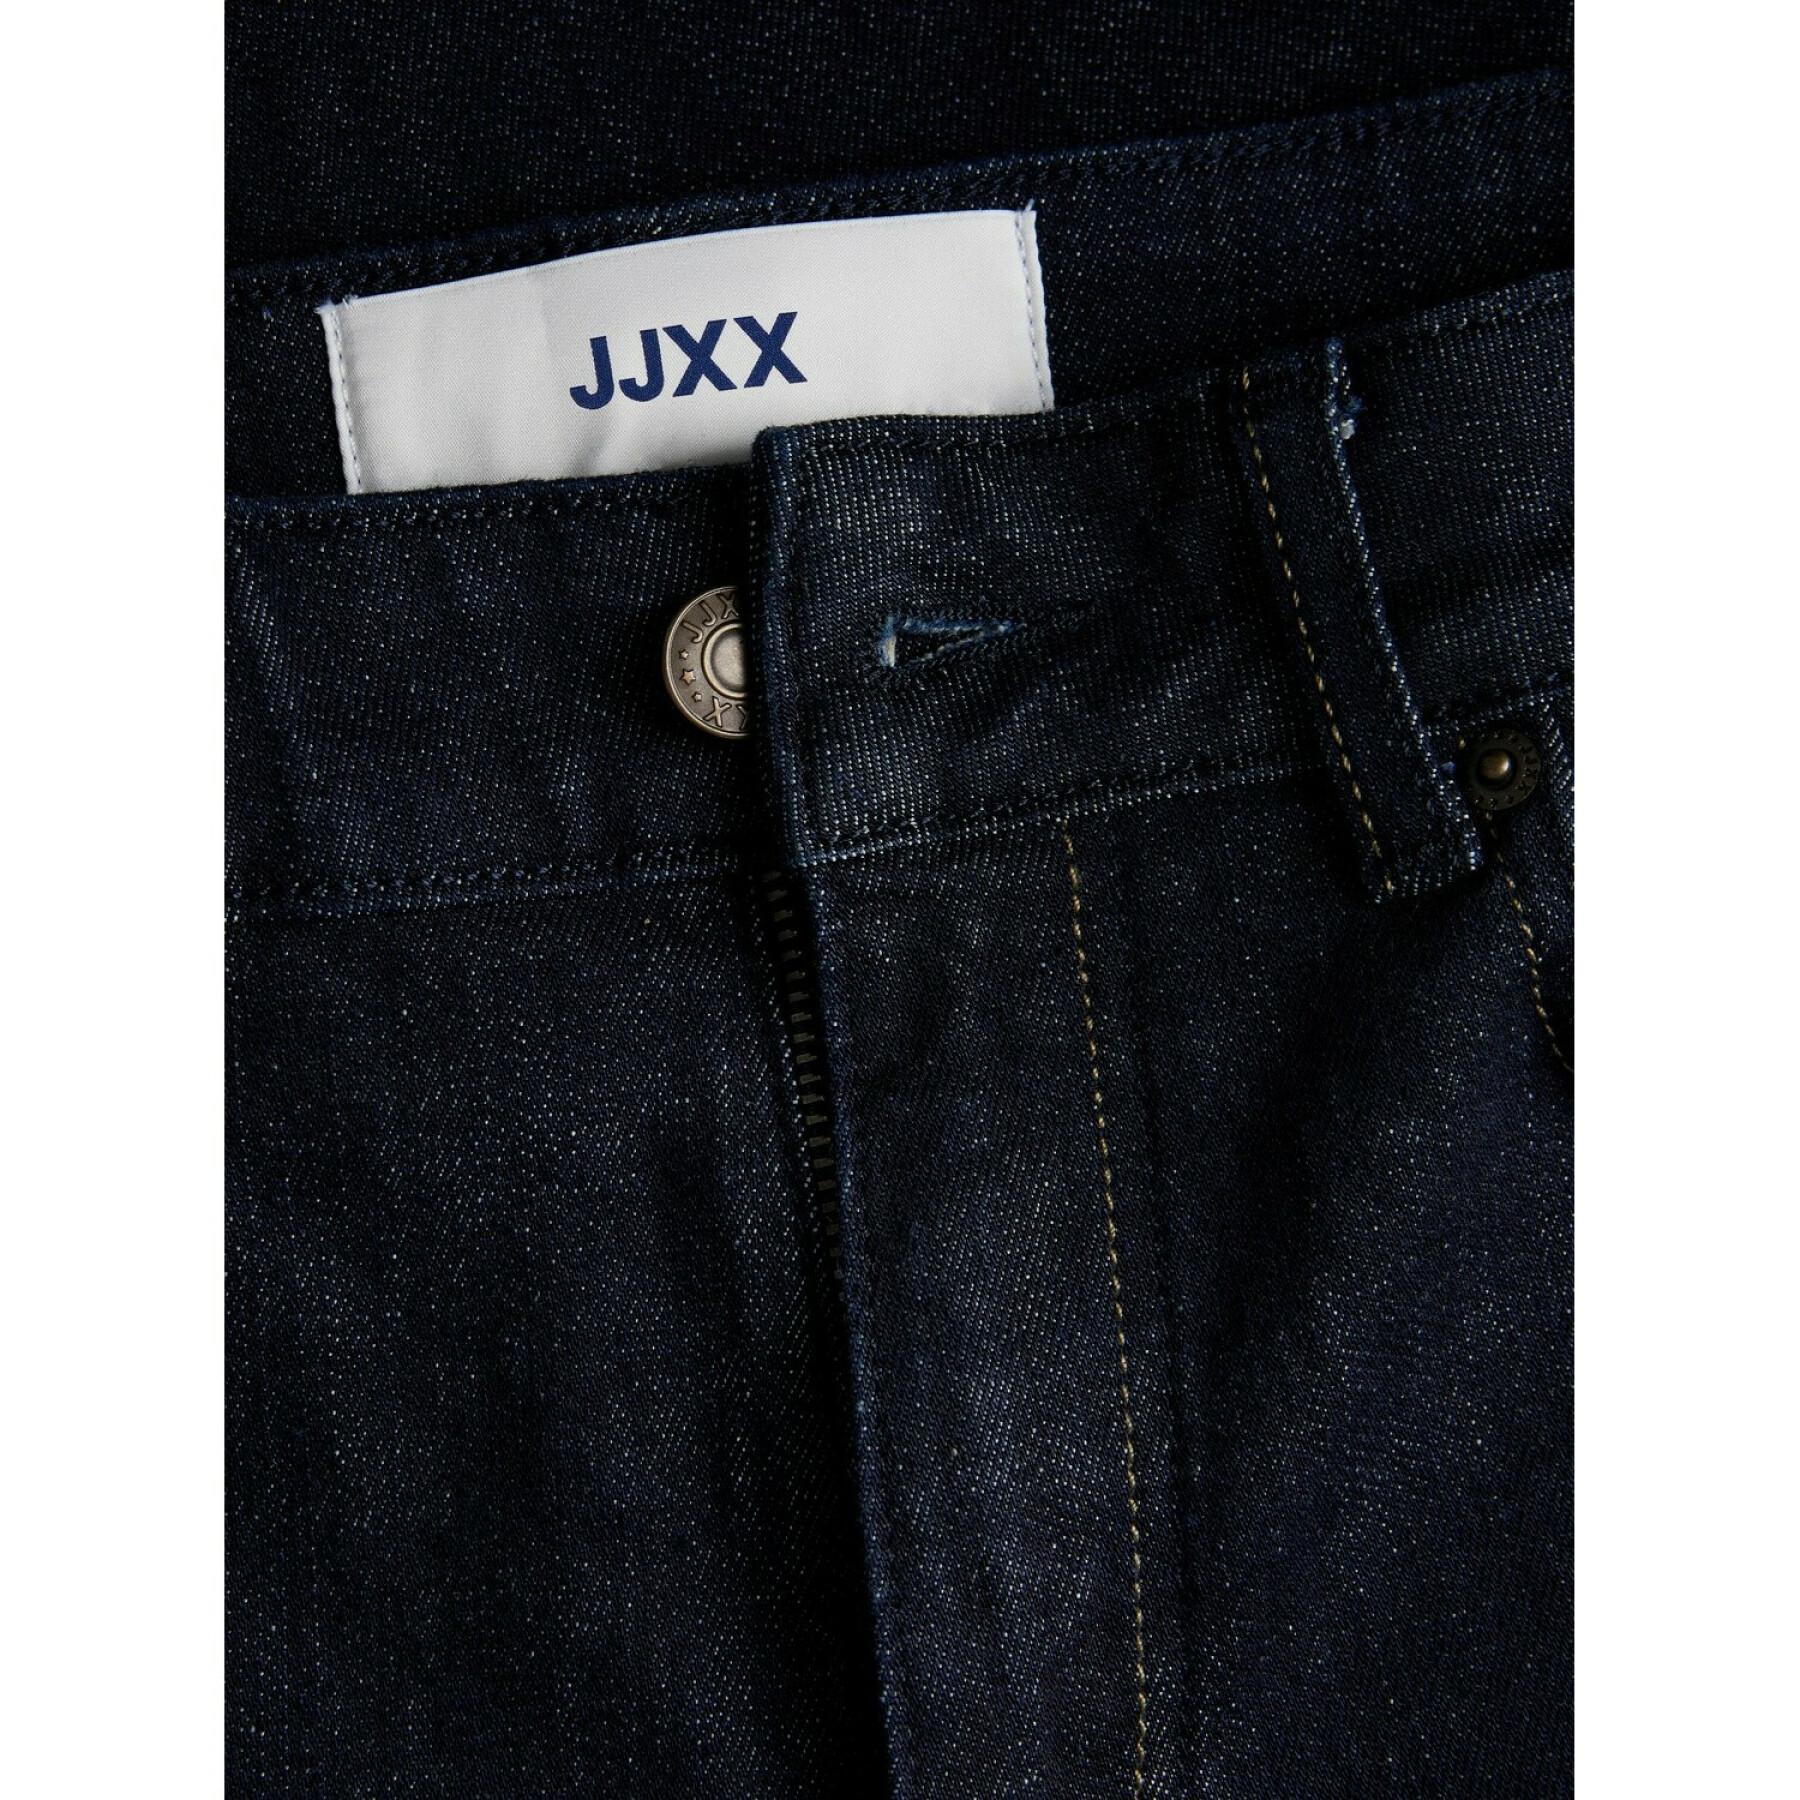 Women's skinny jeans JJXX berlin selvedge rc2002